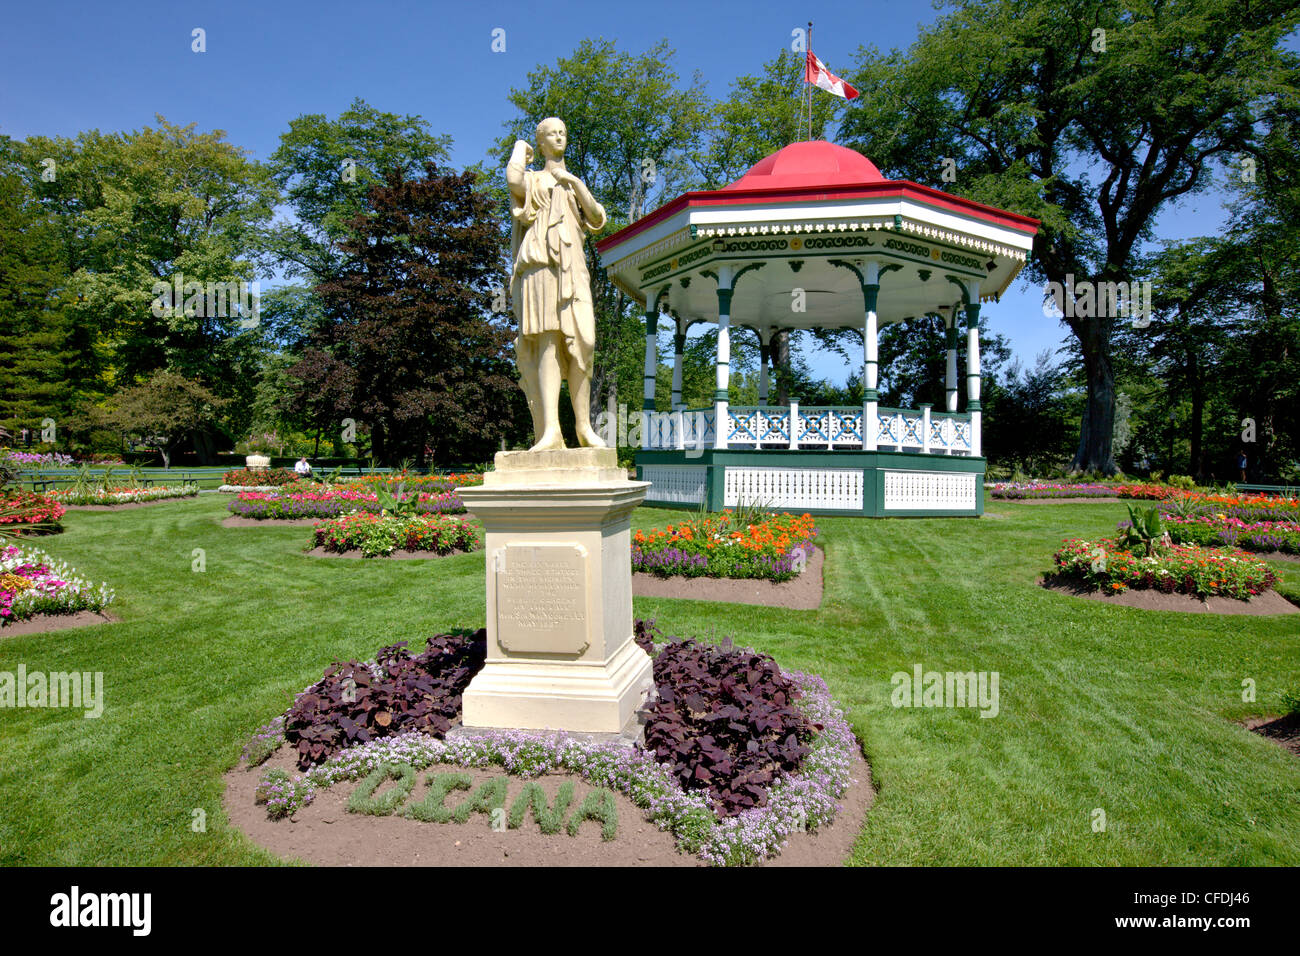 Statue and Gazebo, Halifax Public Gardens, Halifax, Nova Scotia, Canada Stock Photo